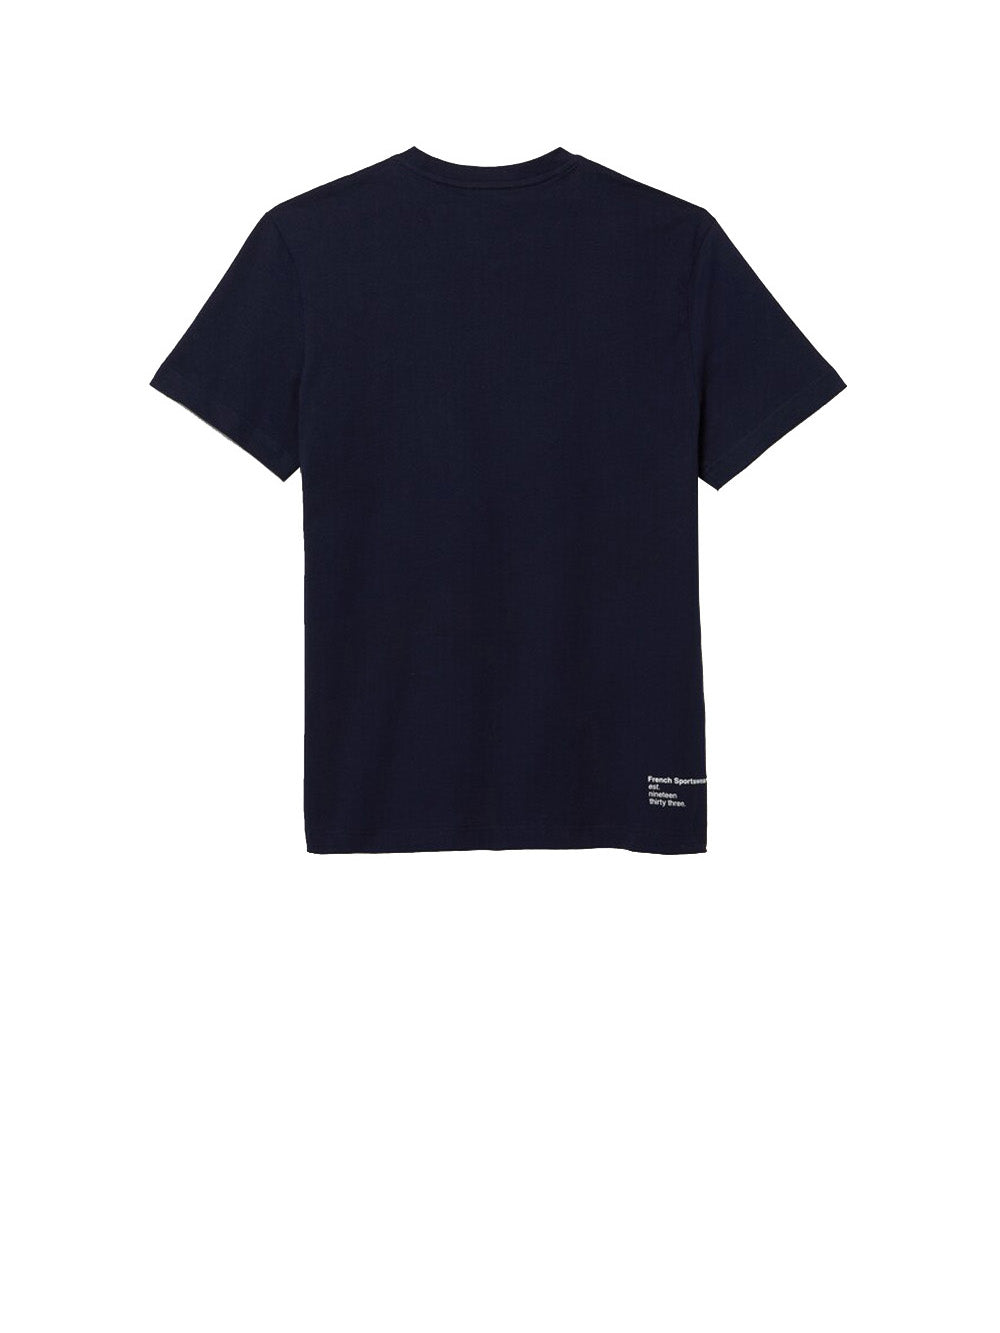 LACOSTE T-shirt Uomo Blu Navy con logo NAVY